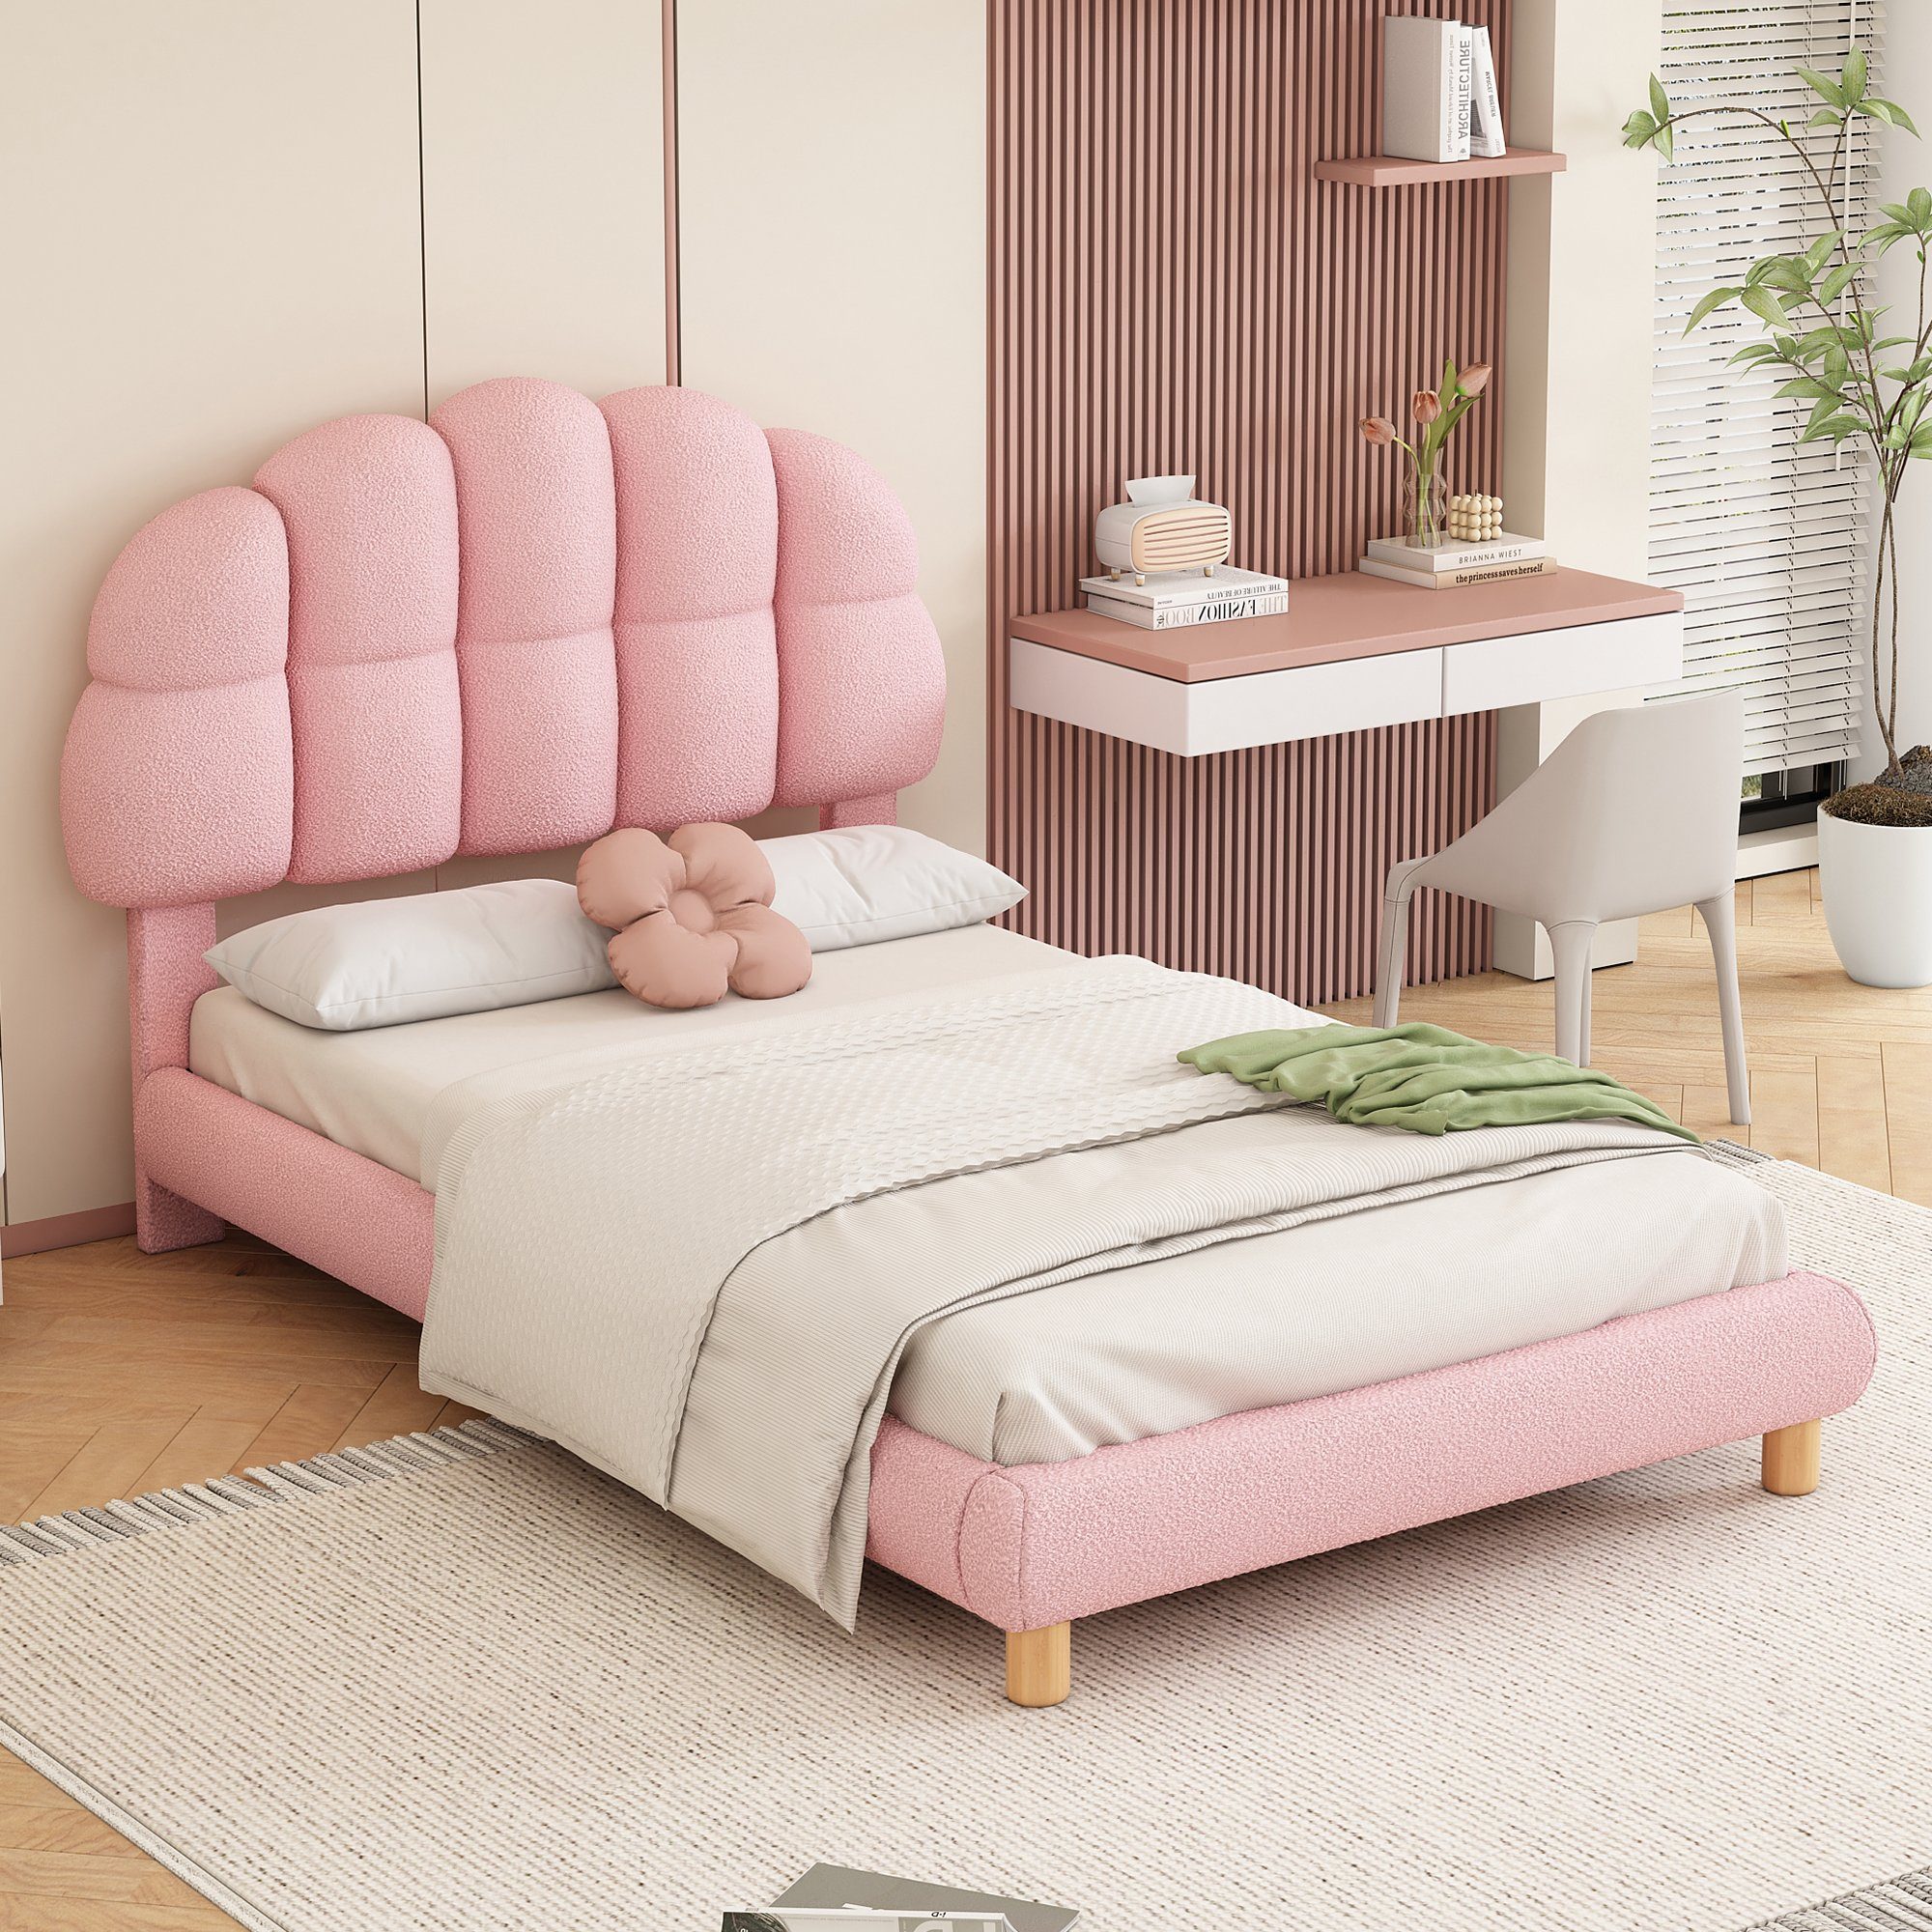 Ulife Polsterbett Kinderbett, Jugendbett mit Samtbezug, Halbkreisform Kopfteil, 90 × 200 cm, Rosa